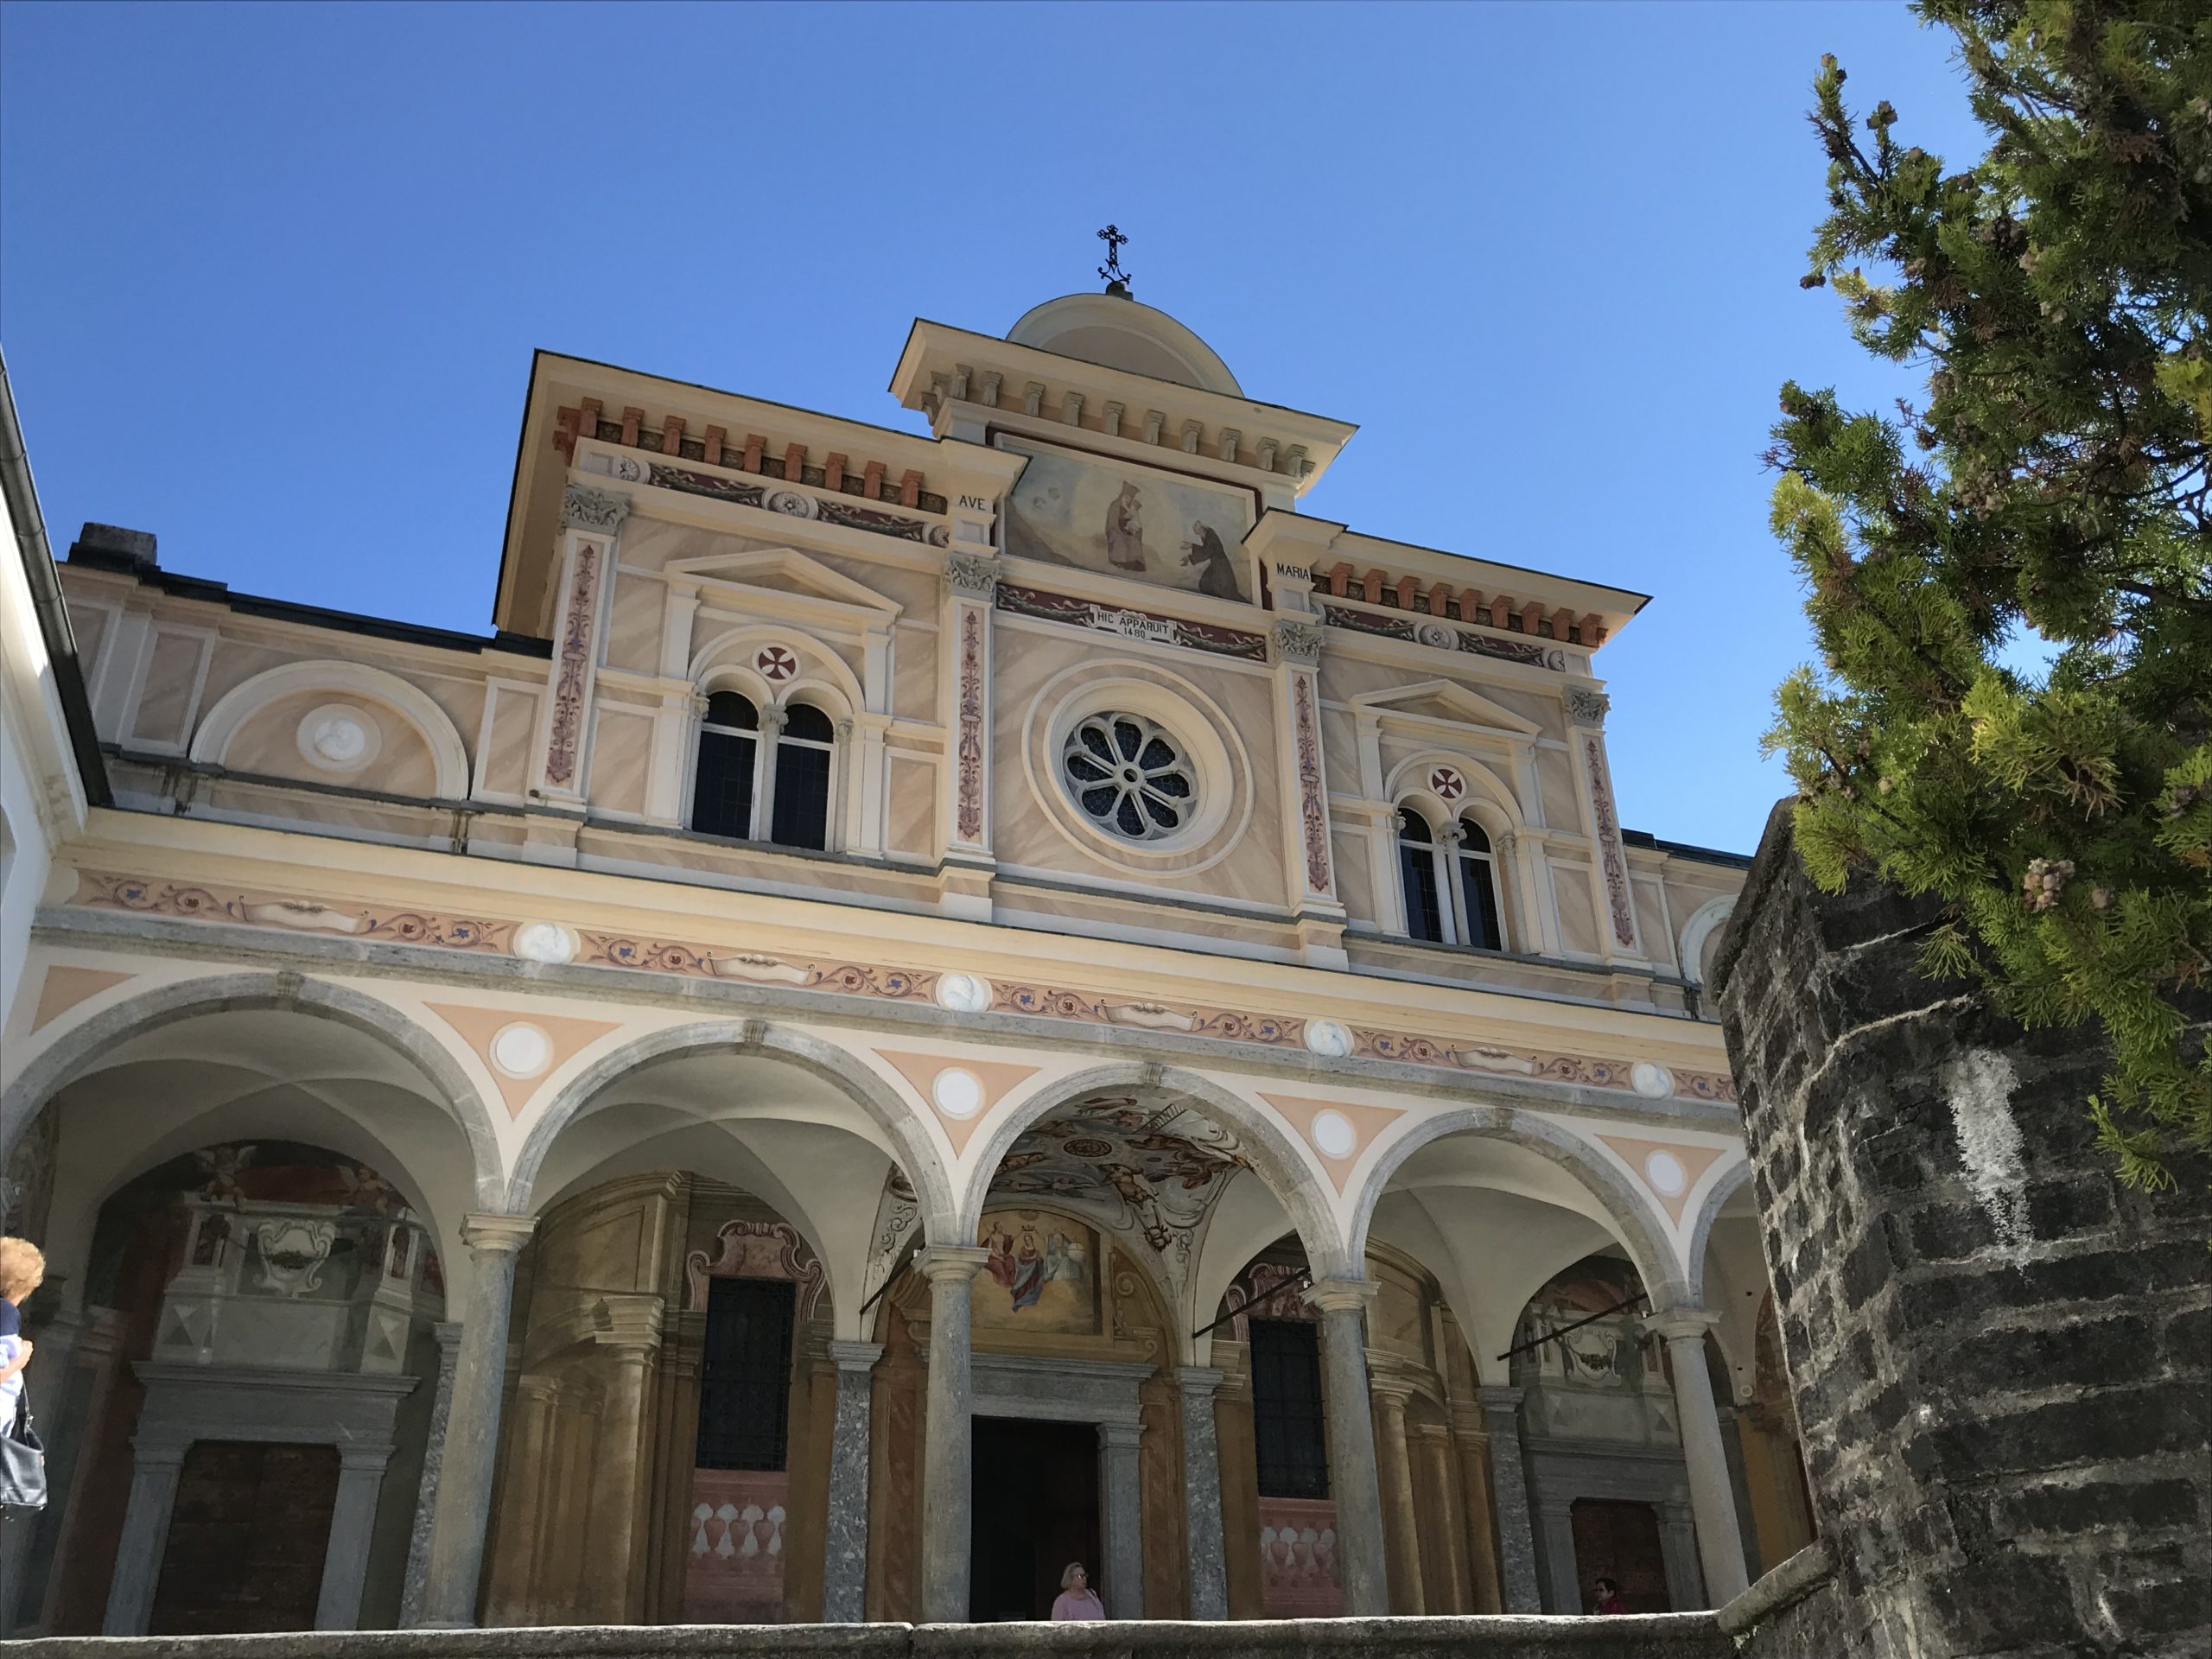 The Sanctuary of the Madonna del Sasso